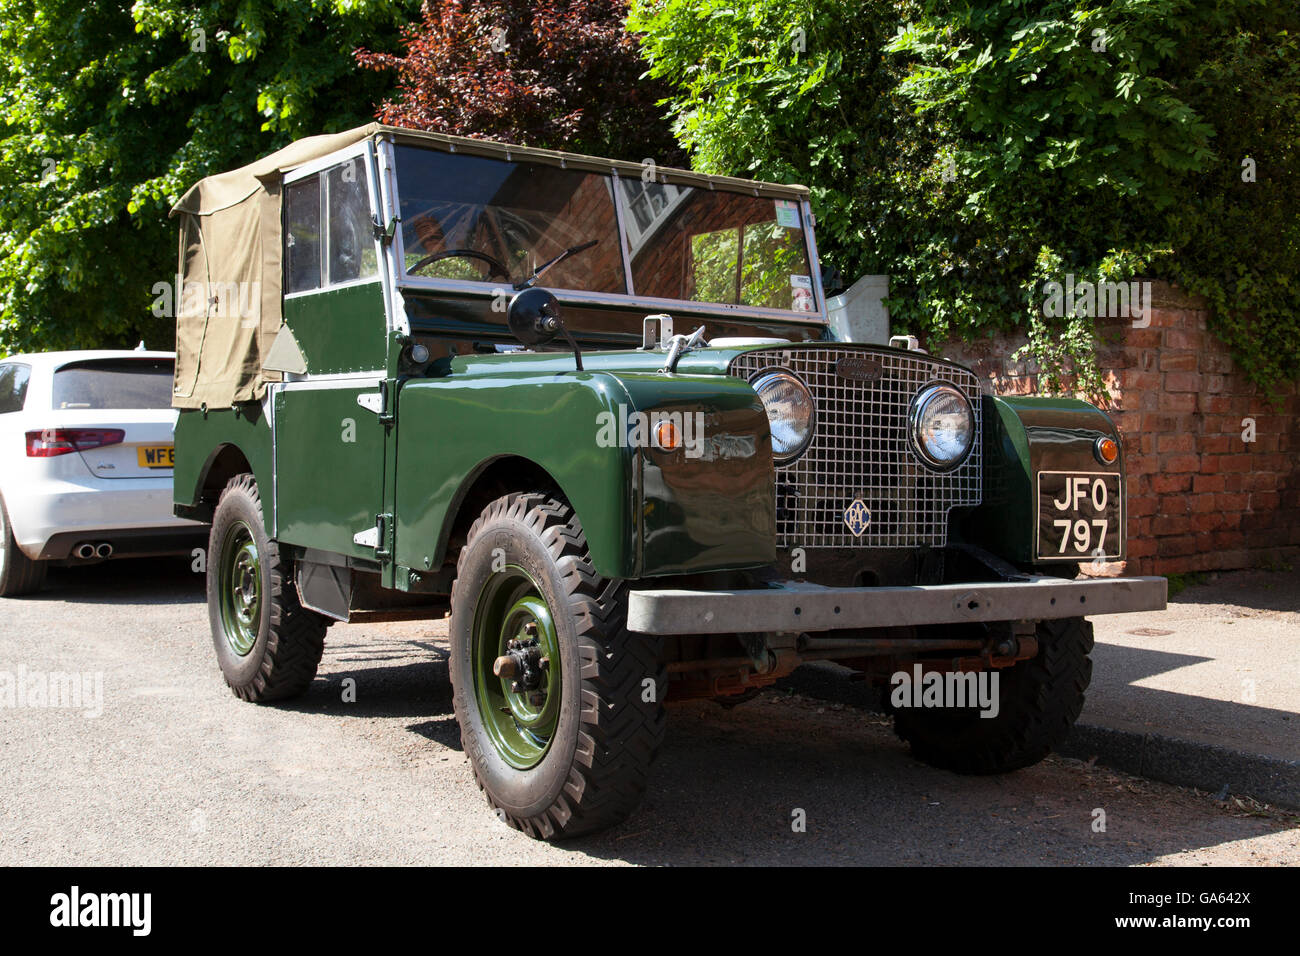 A restored classic Land Rover i a village in the U.K. Stock Photo